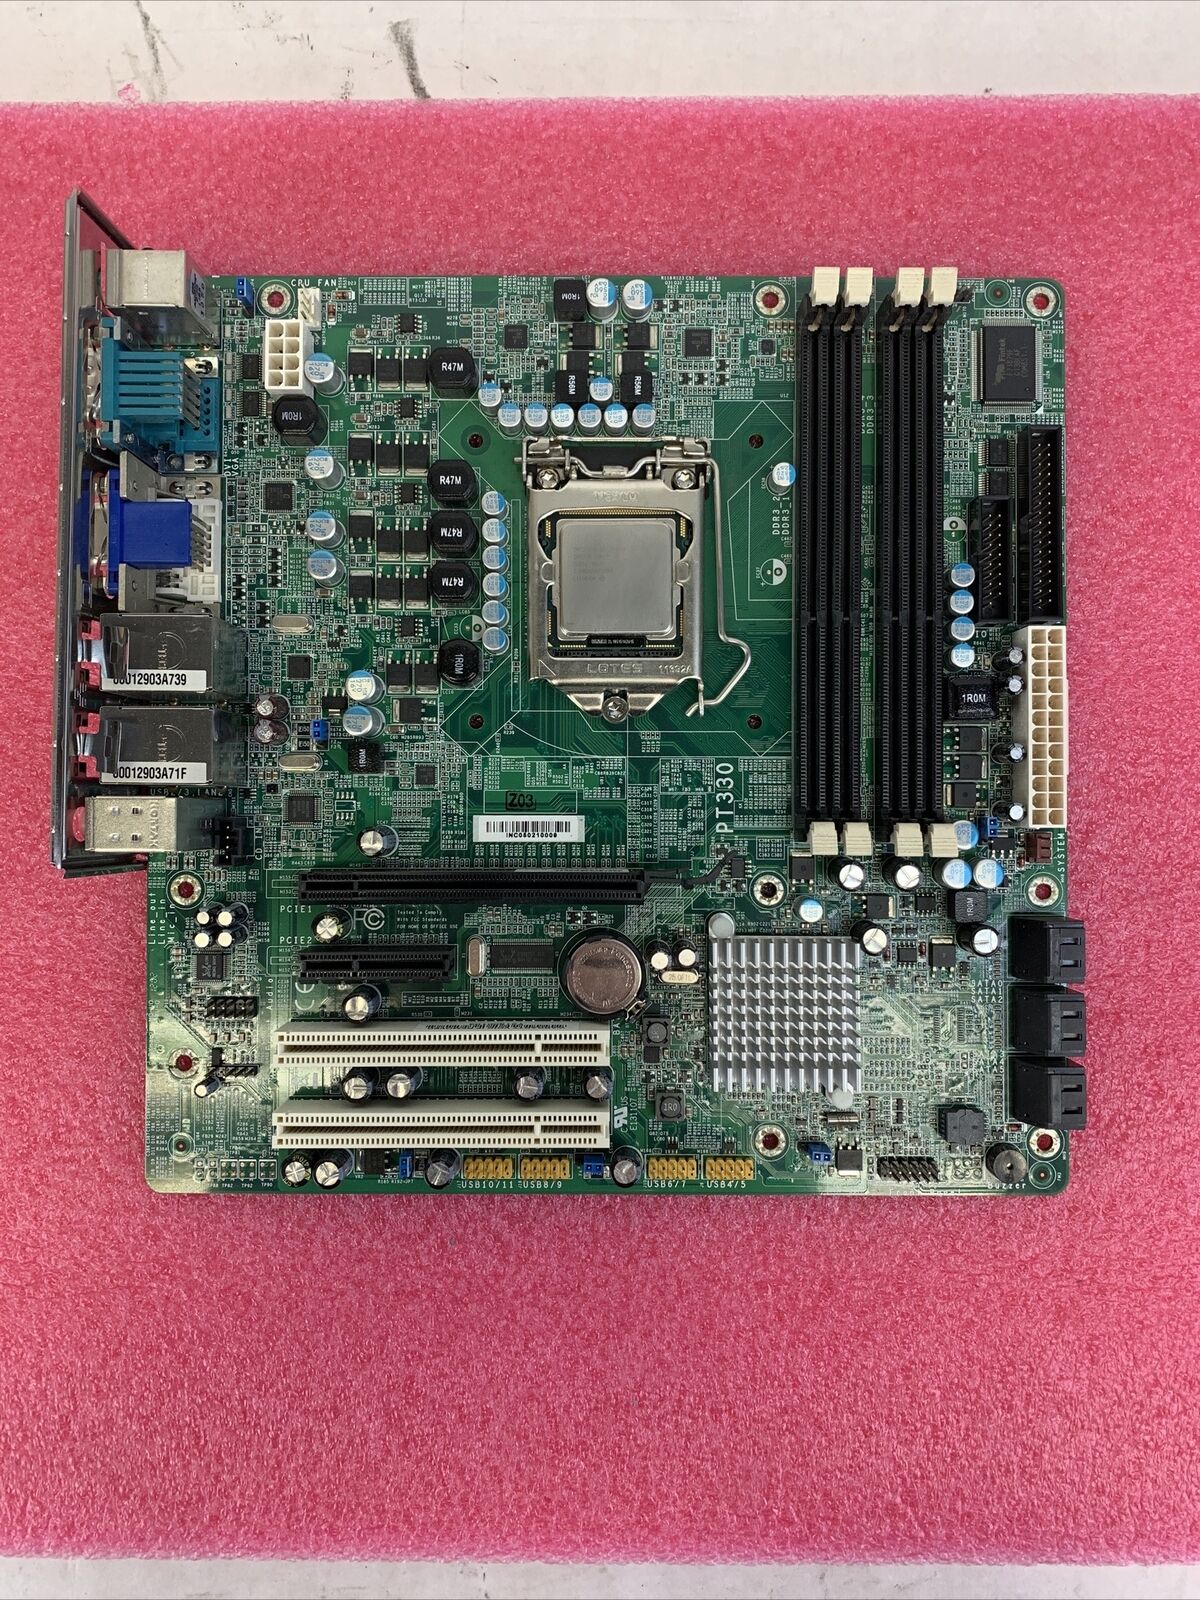 DFI PT330 Motherboard Intel Core i5-650 3.2GHz No RAM w/Shield